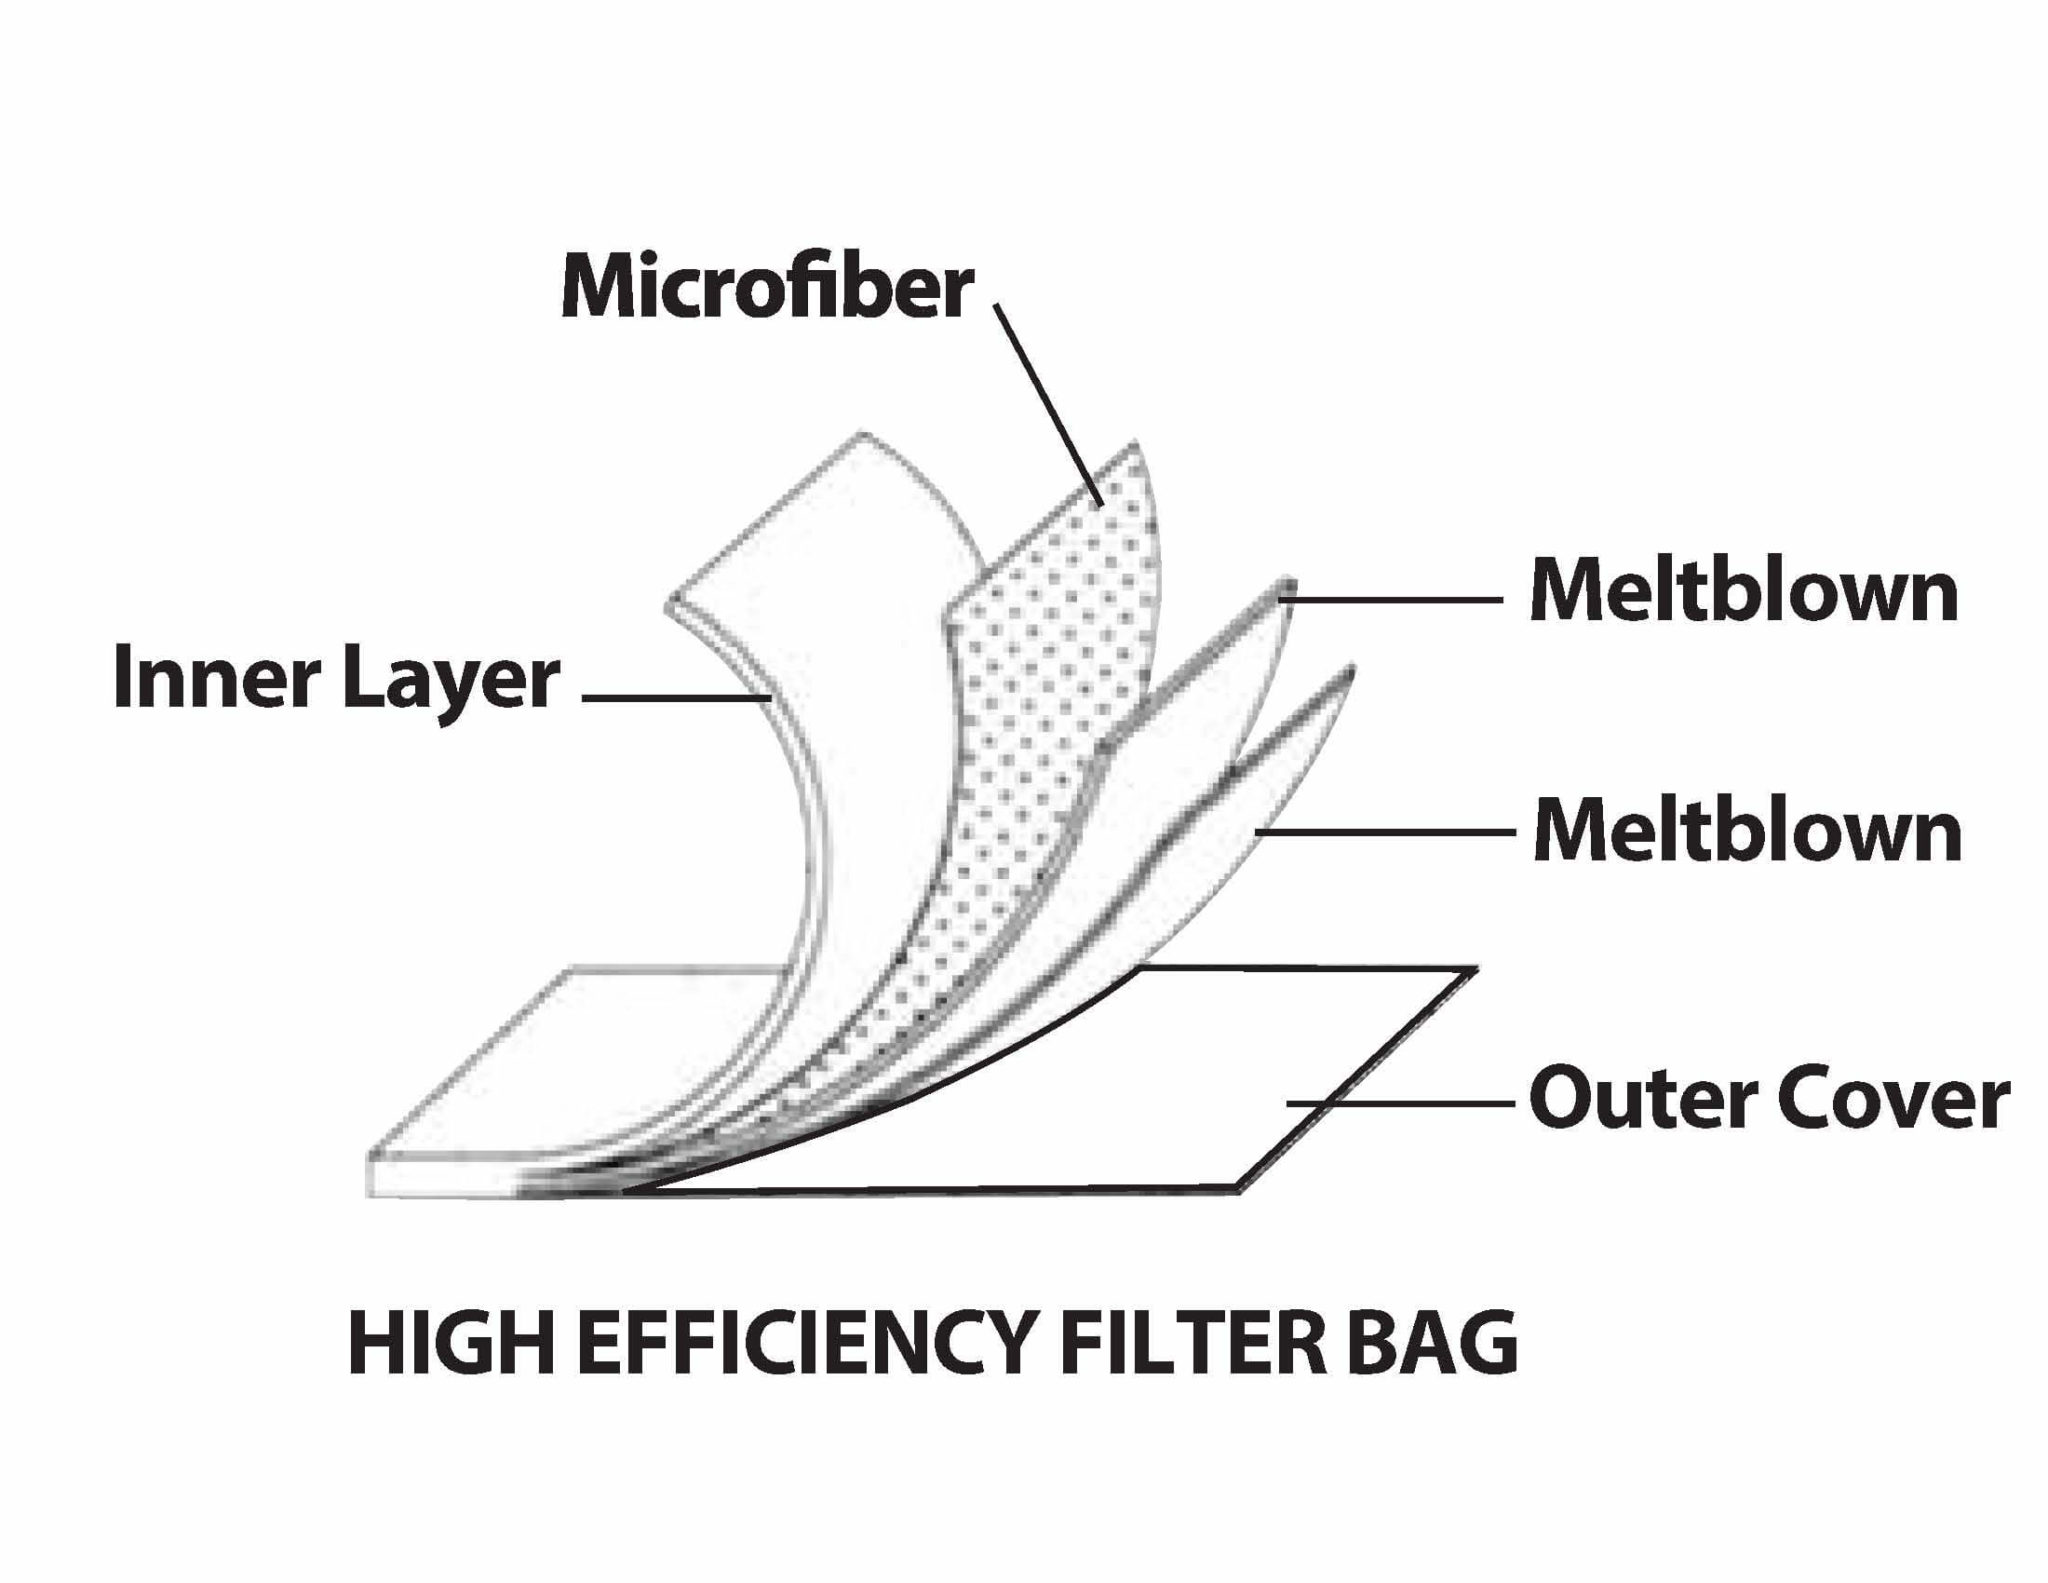 High efficiency filter bag diagram